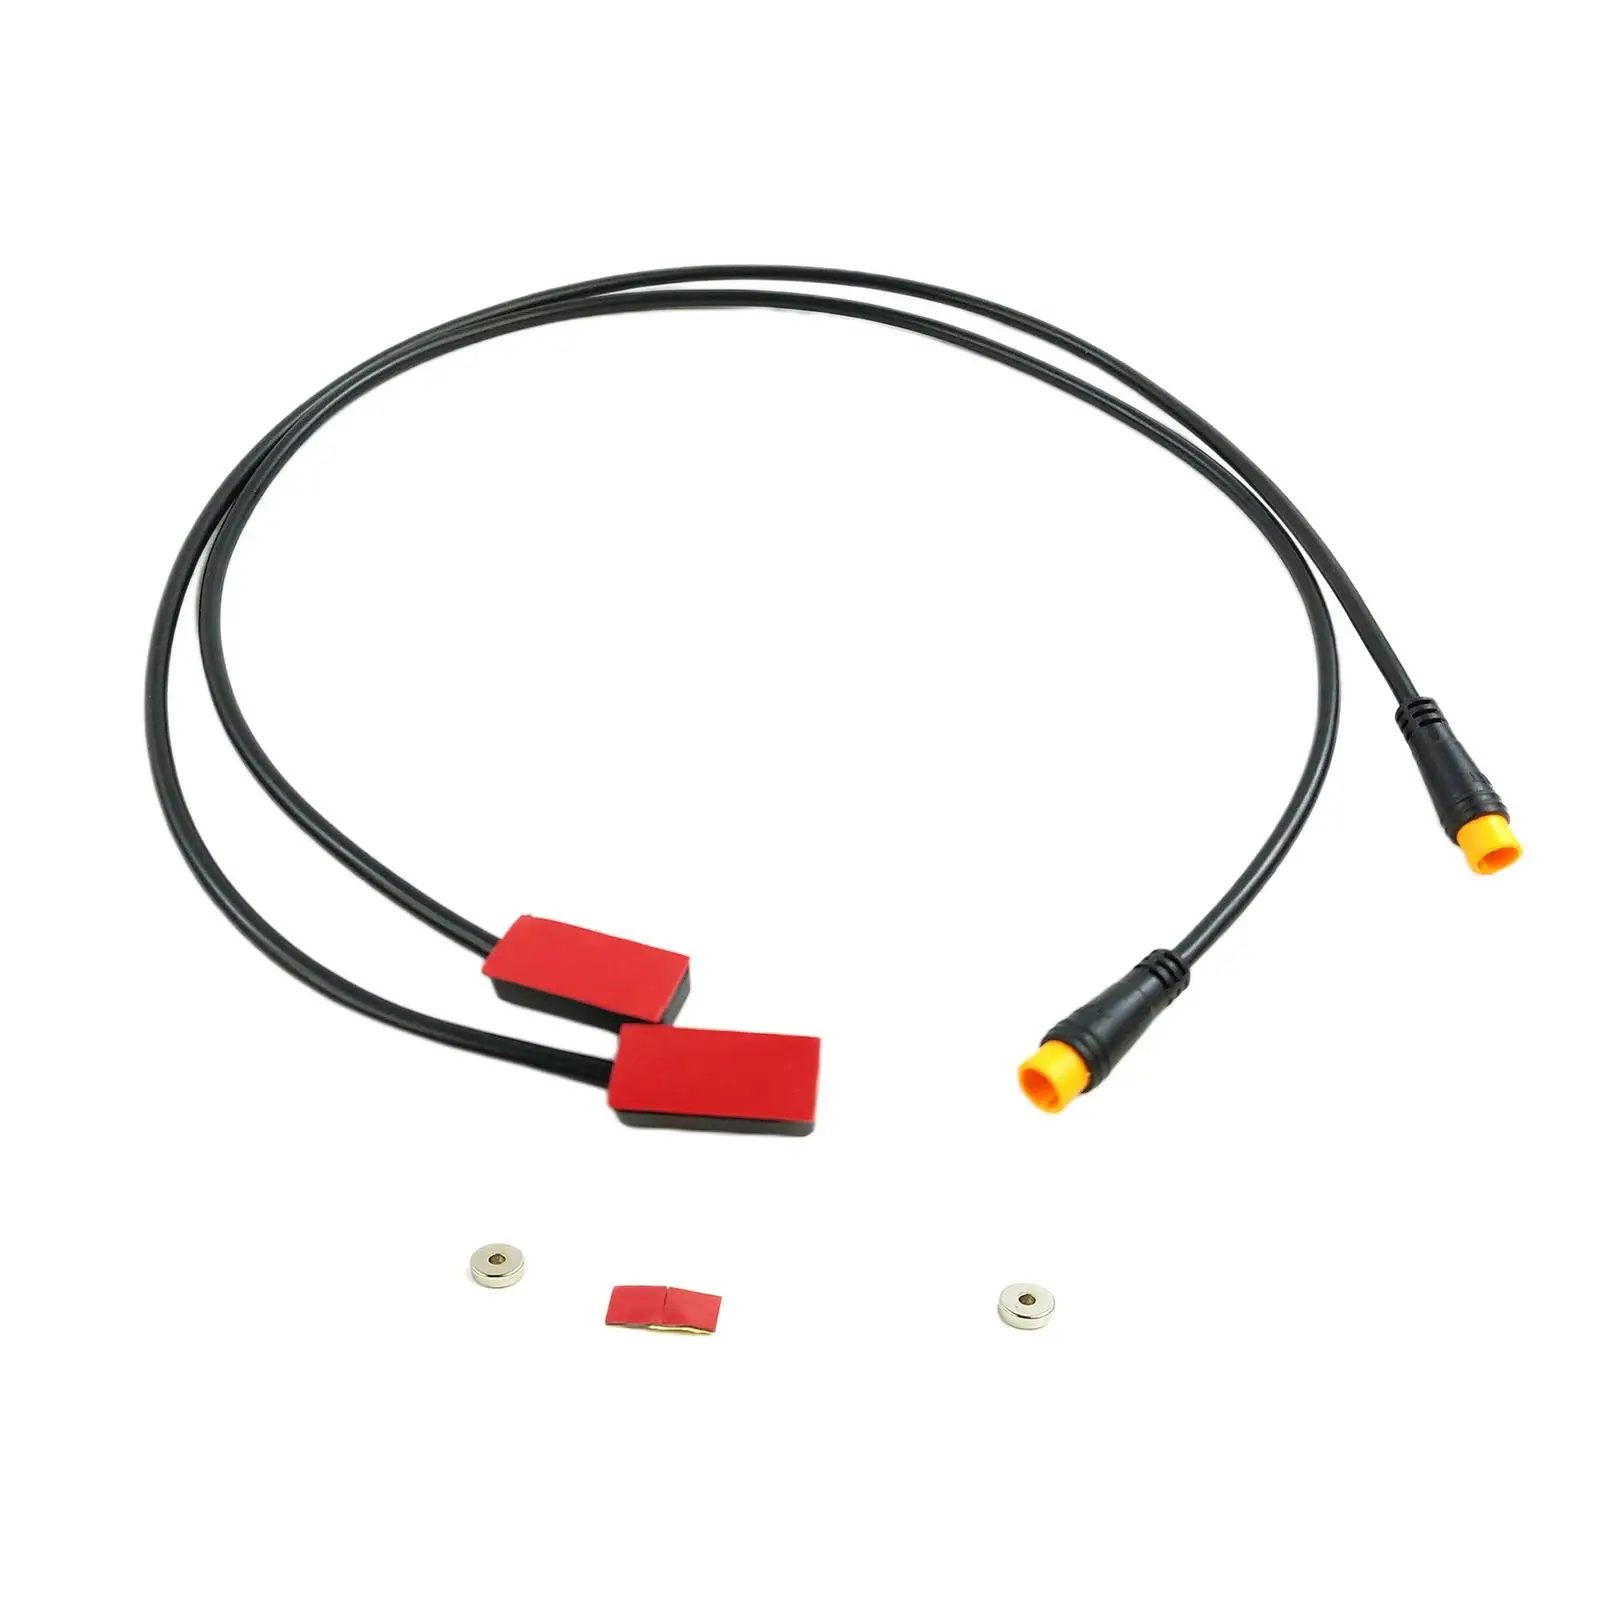 Hydraulic Brake Sensor Cable Power Off Hydraulic Brake Sensor Mechanical 32cm Durable 3 Pin Supplies Motorcycle Cut Off Power